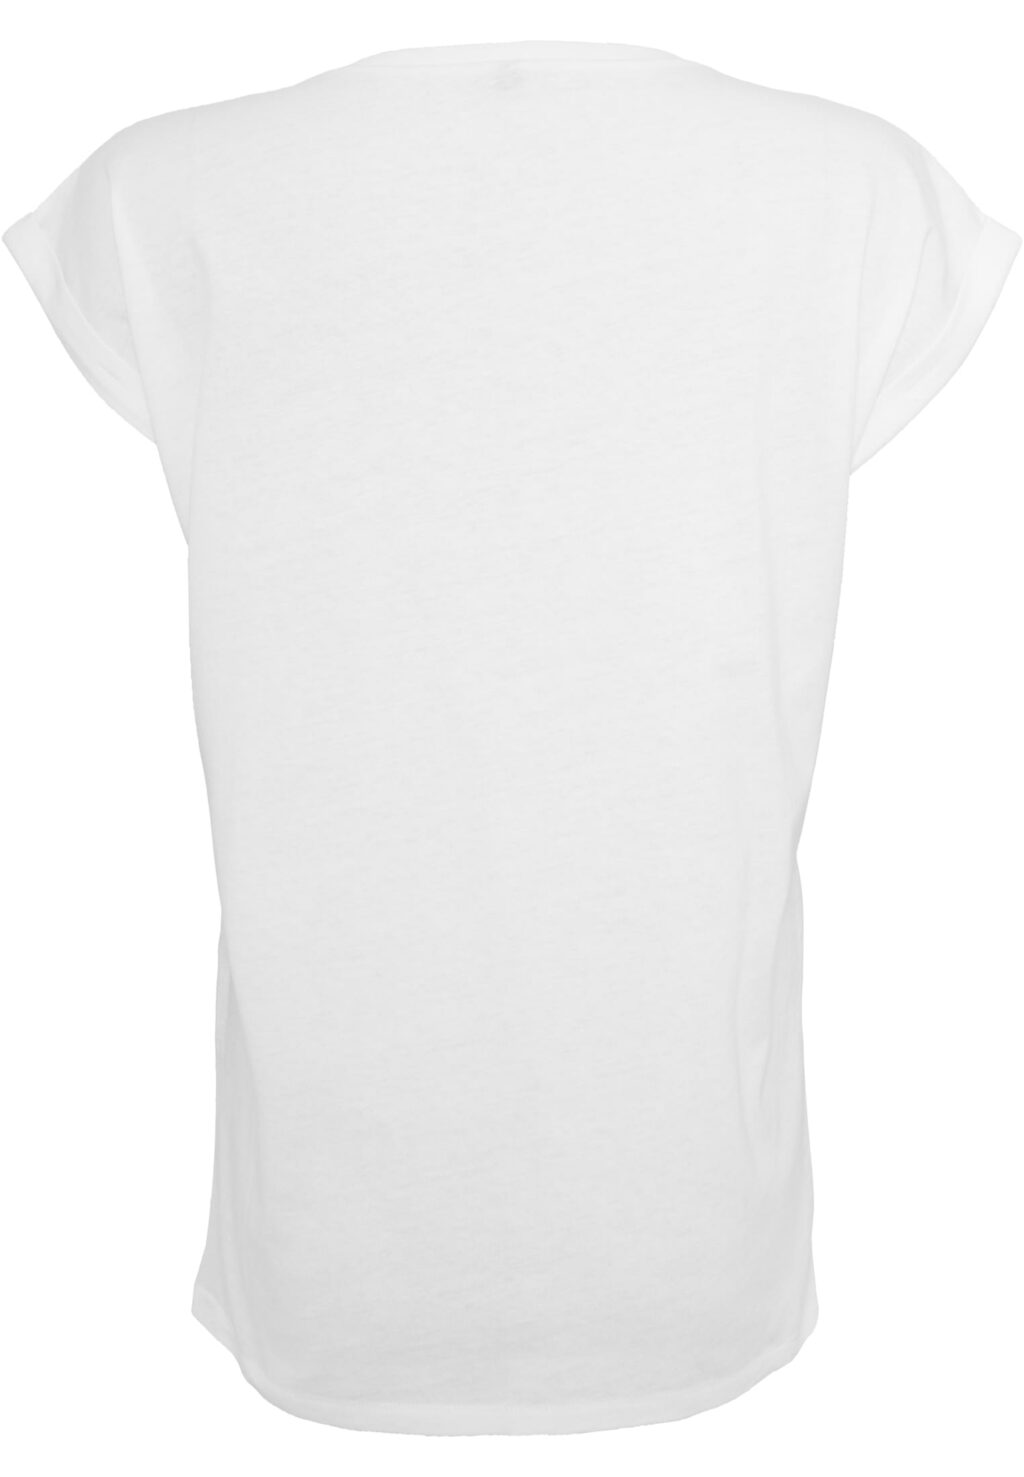 Ladies Dream Big T-Shirt white MP0000432